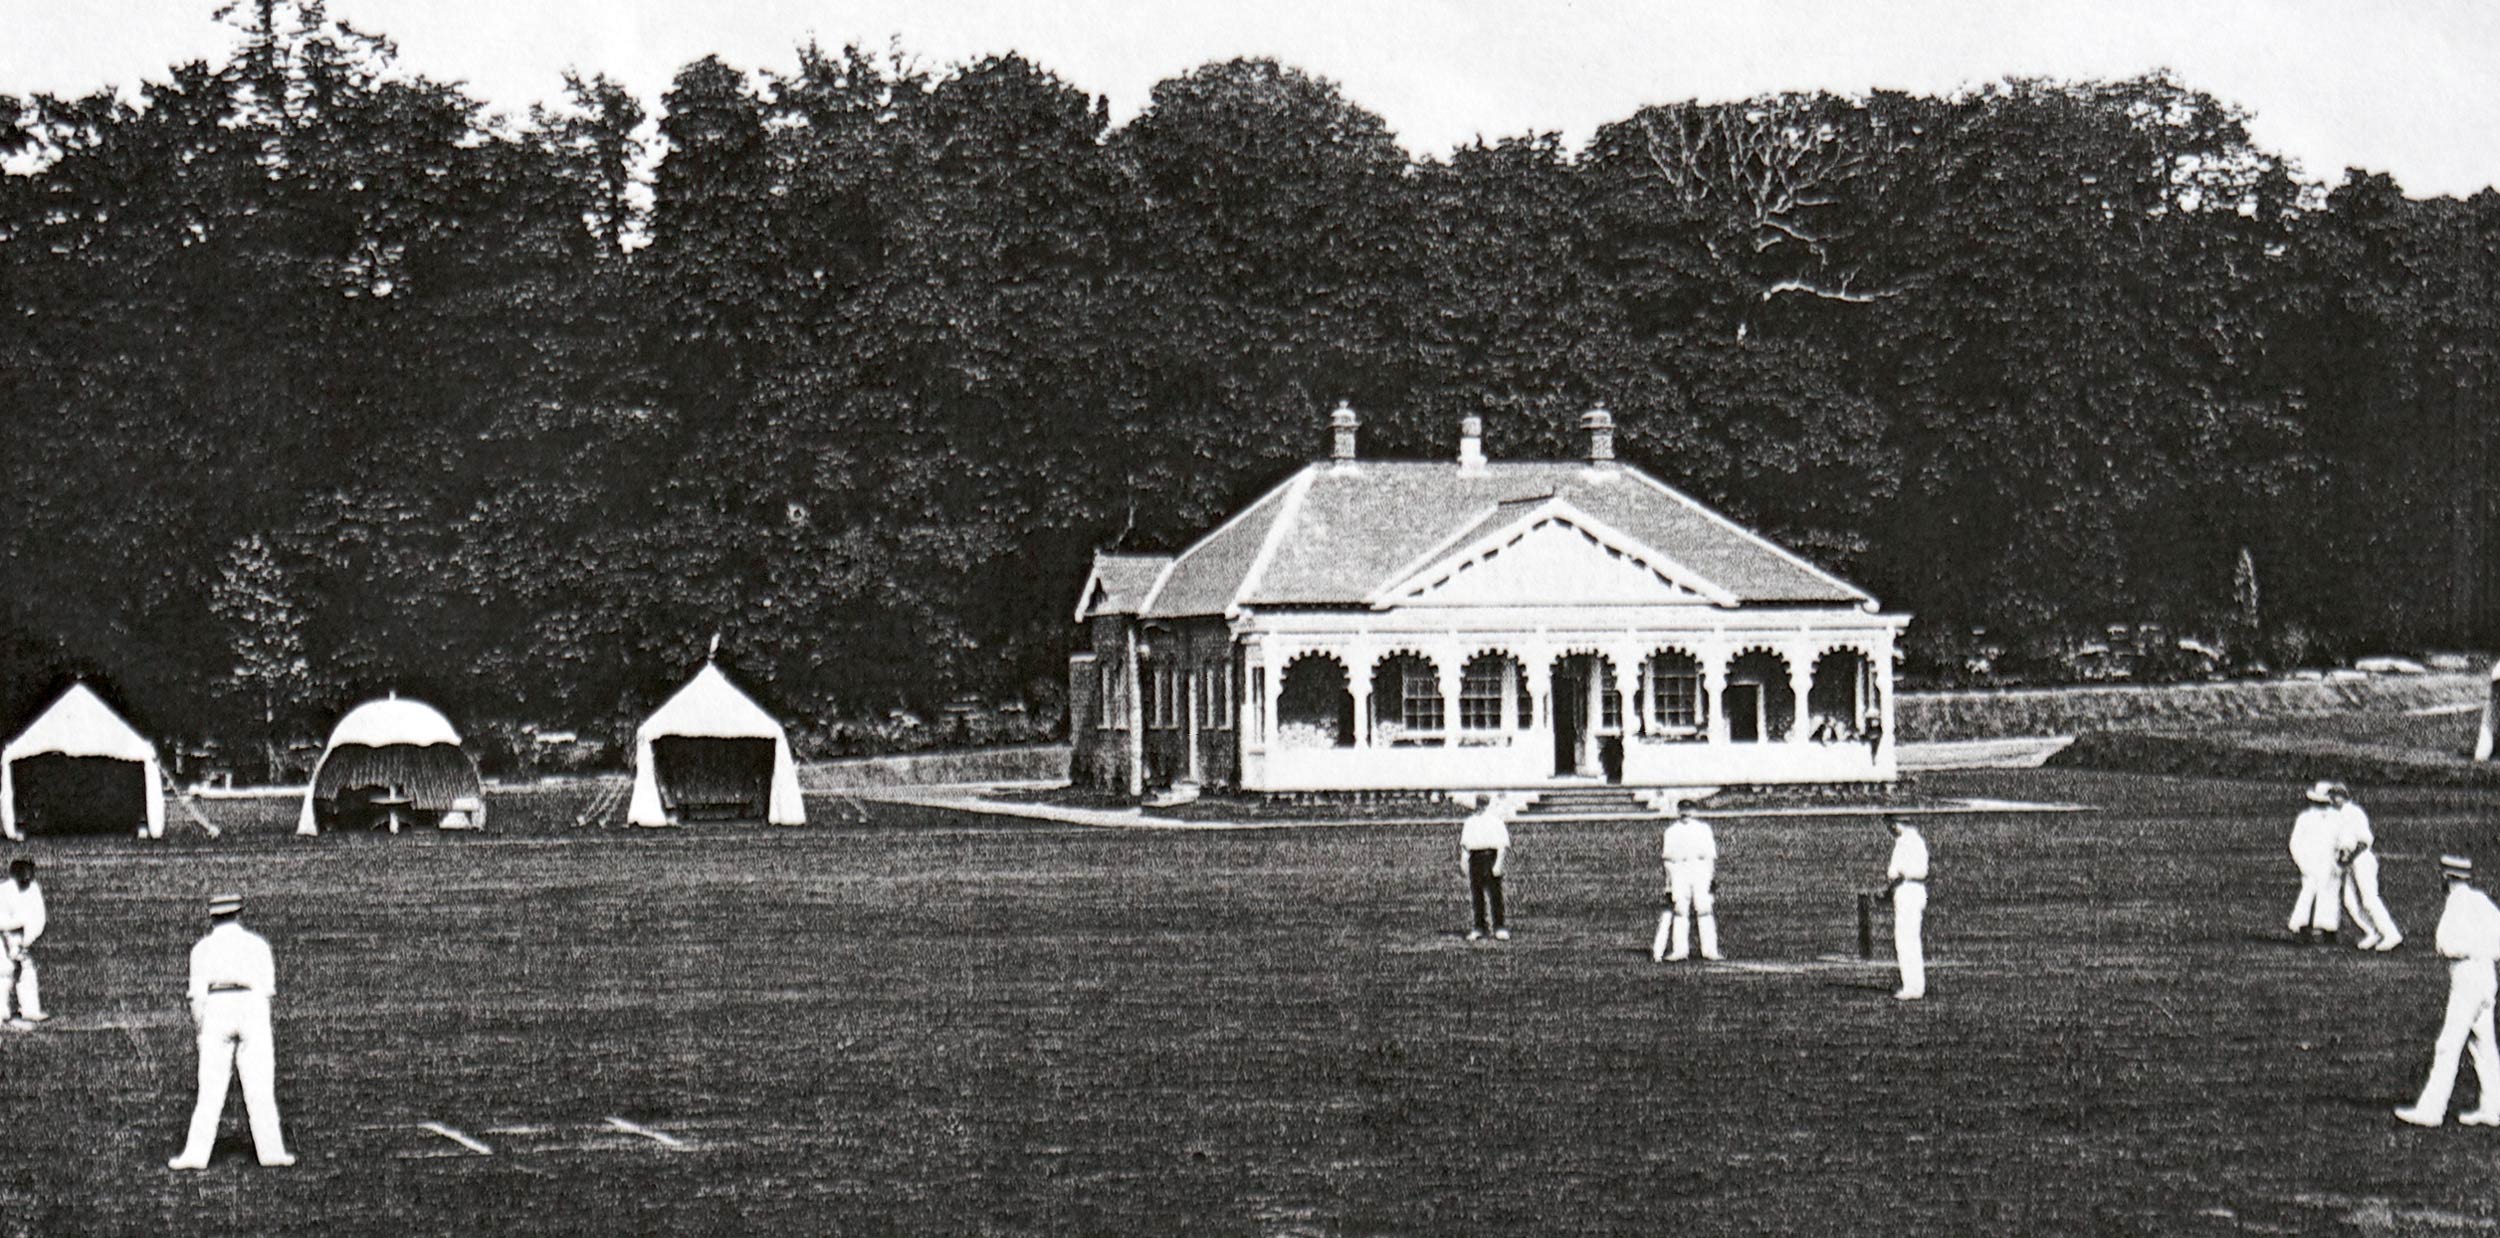 Halton pavilion and grounds, 1906